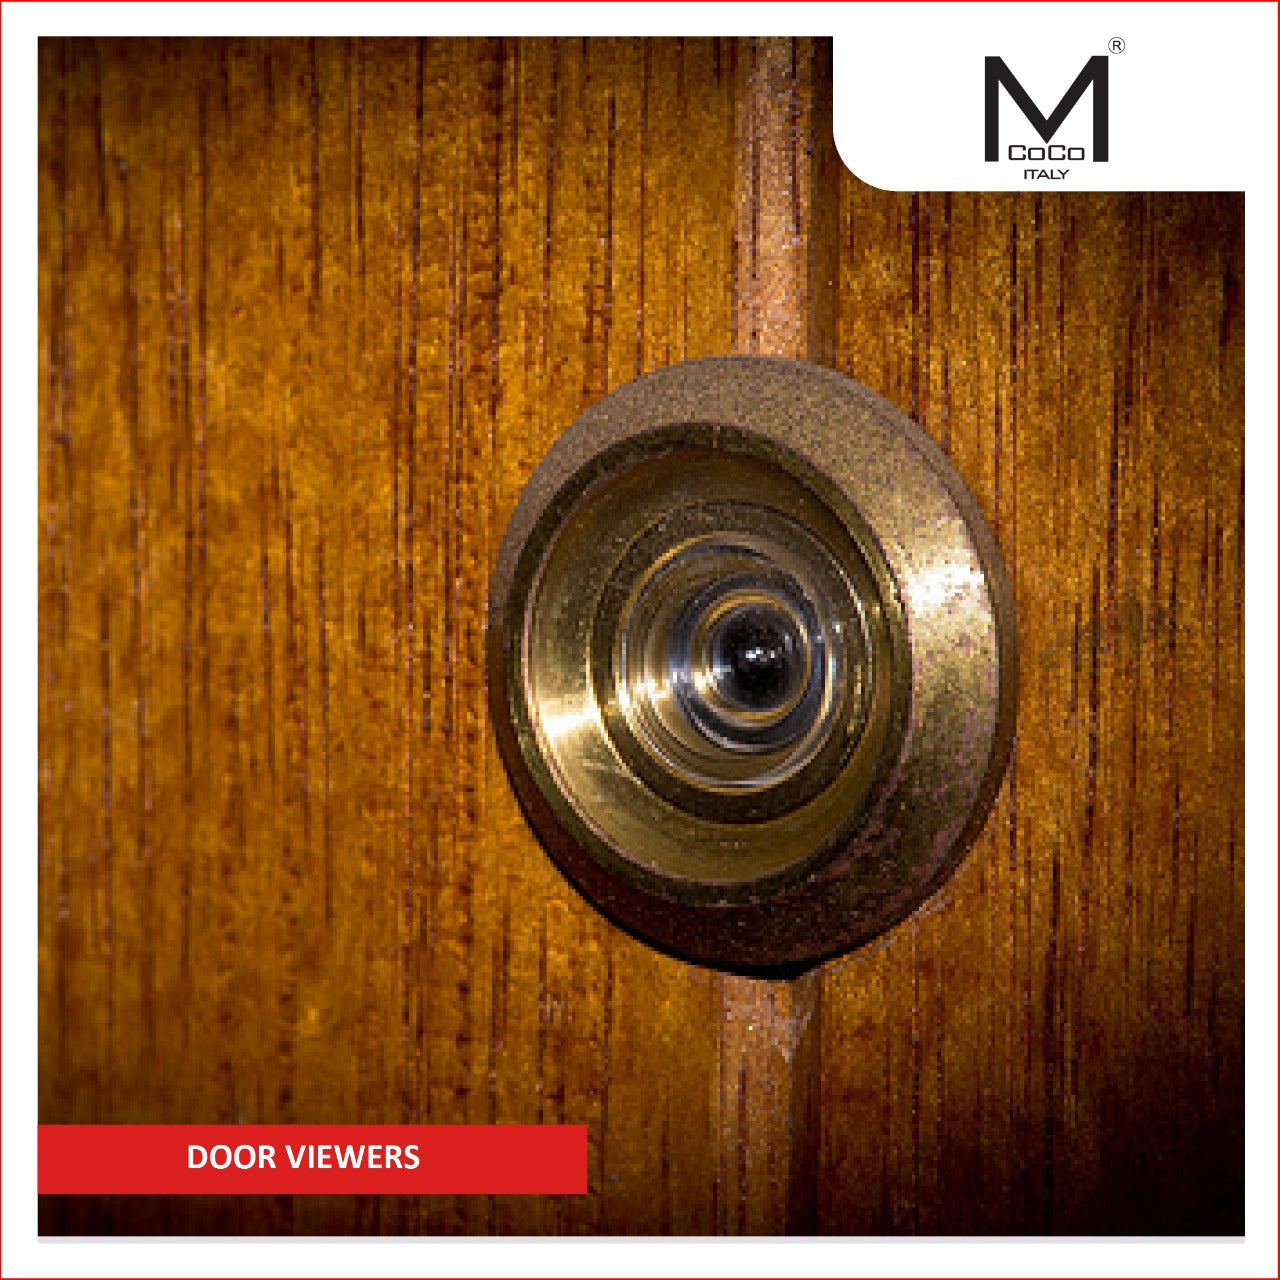 Mcoco Door Viewers Cap - Enhance Home Security with Stylish Door Viewer Covers